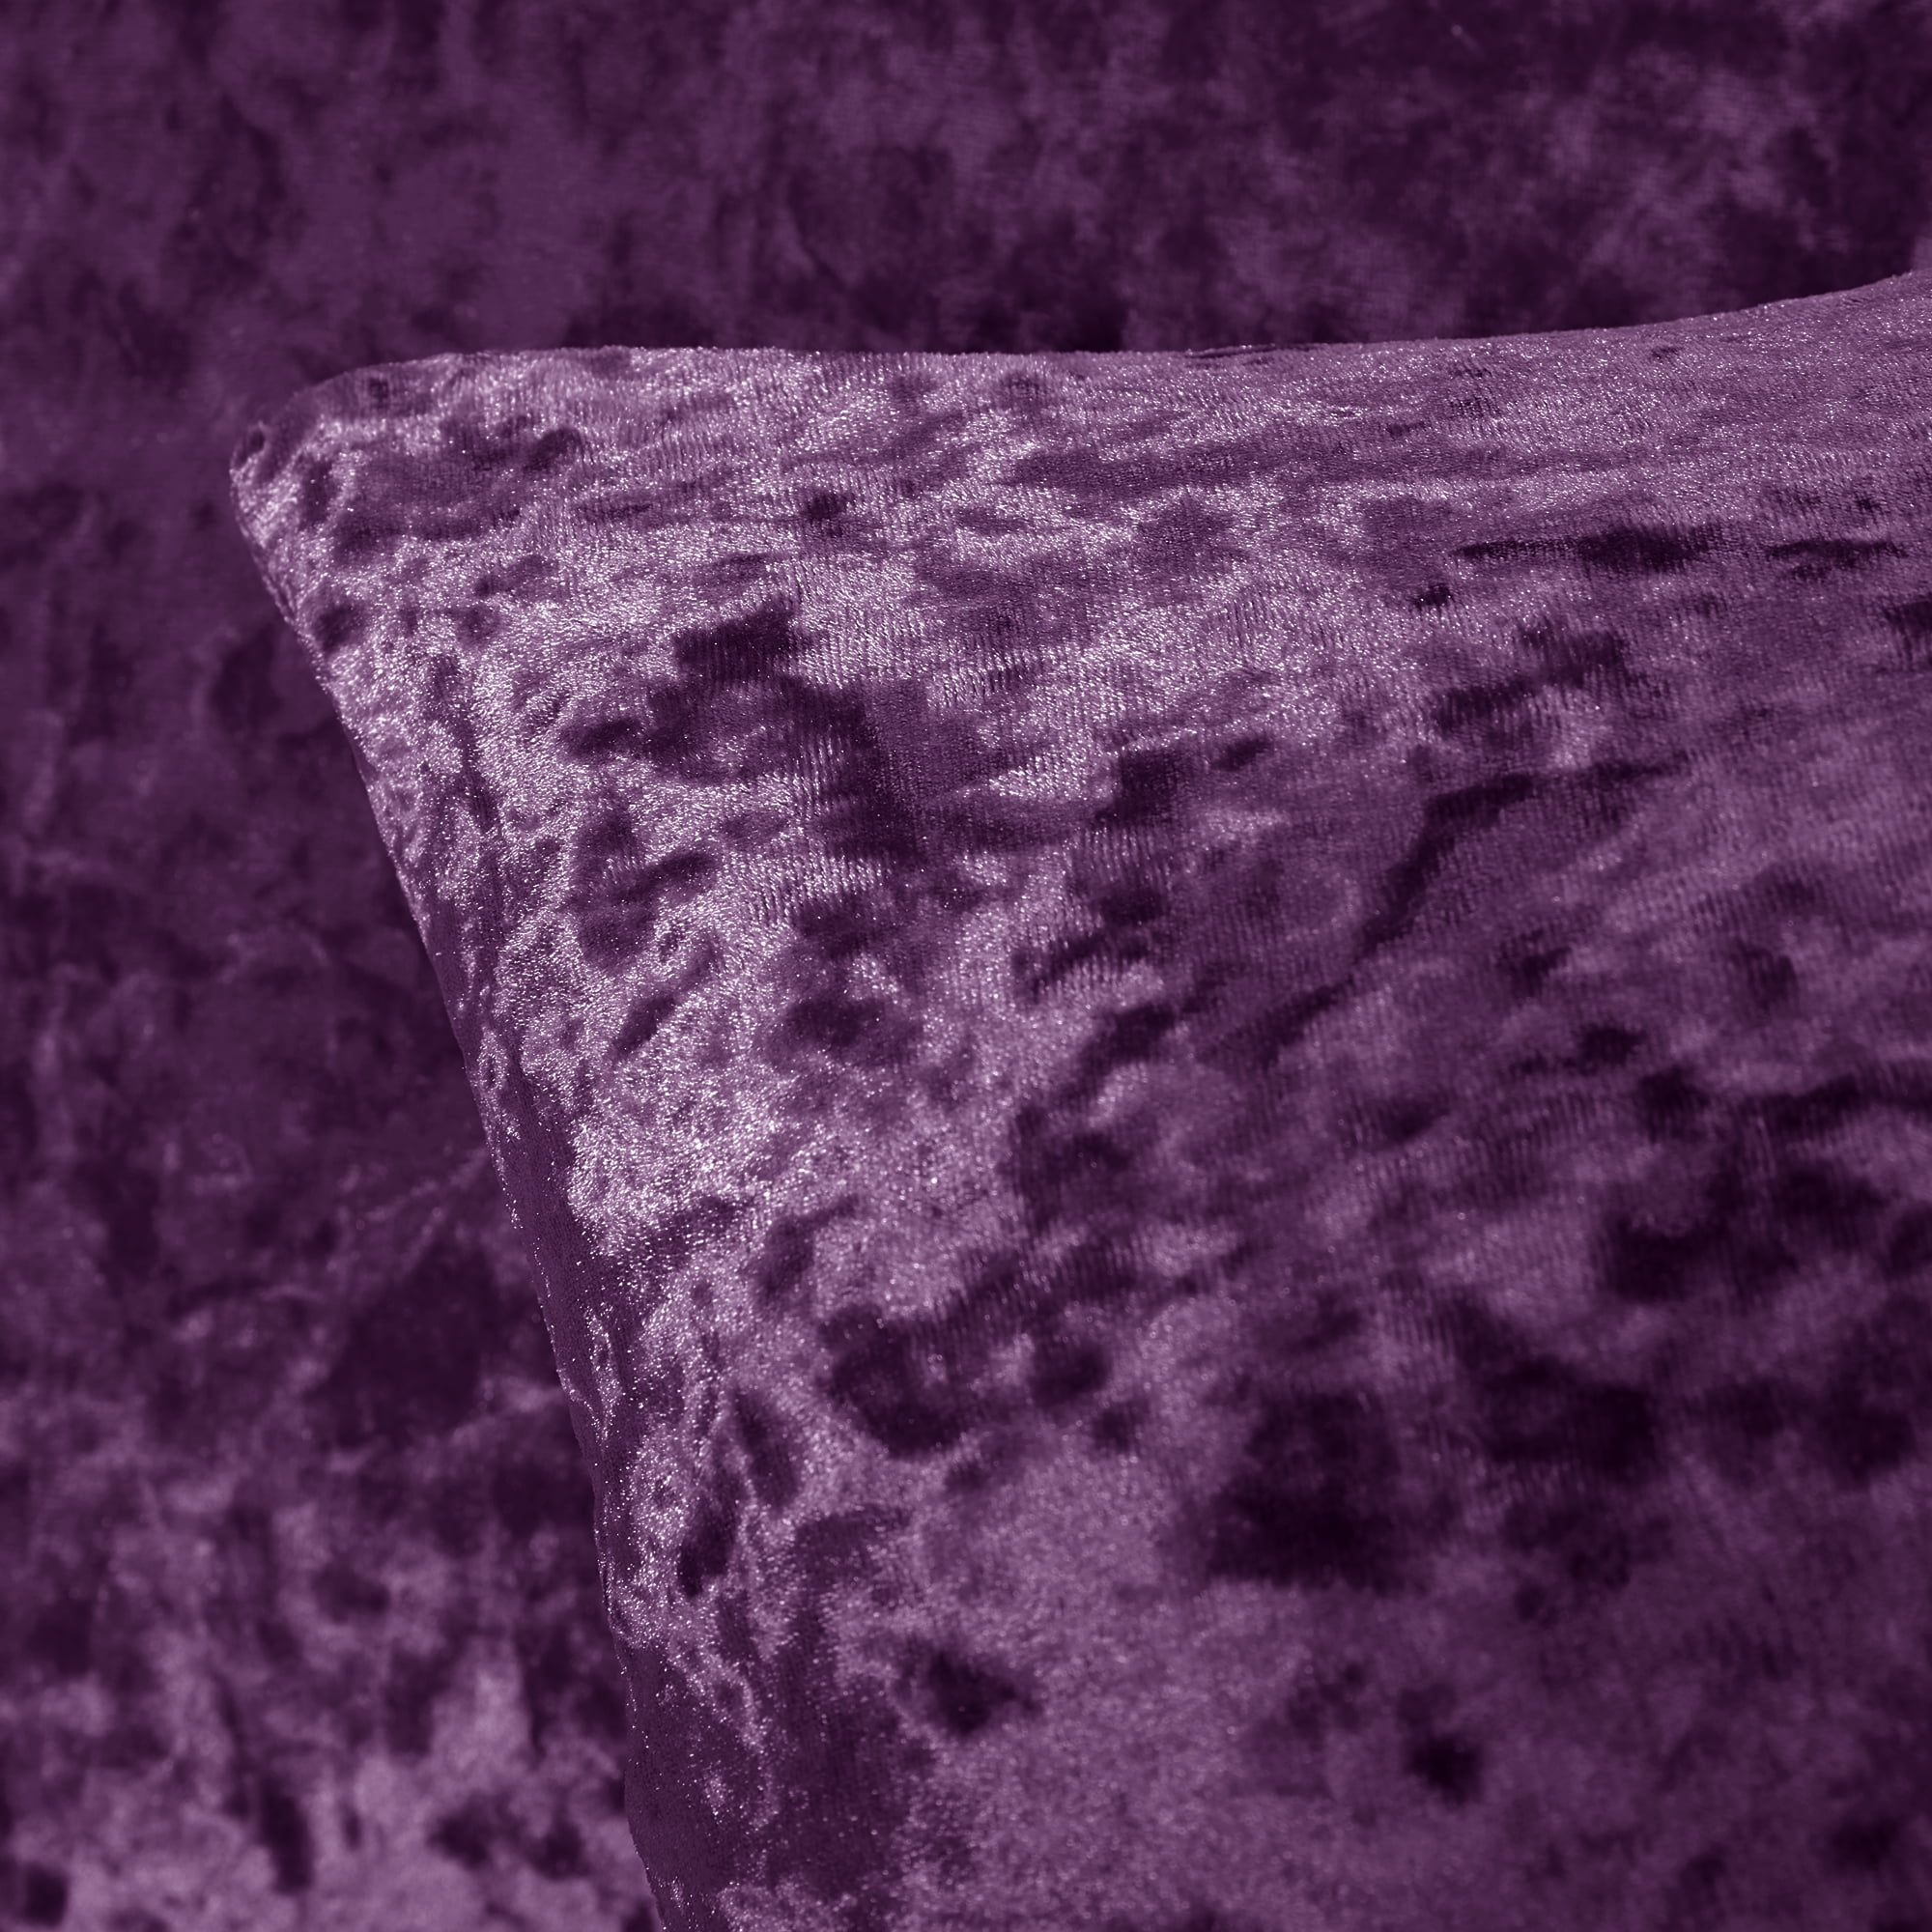 Disney Art Classics 18 Black and Purple Geometric Crushed Velvet Throw  Pillow - Down Filler